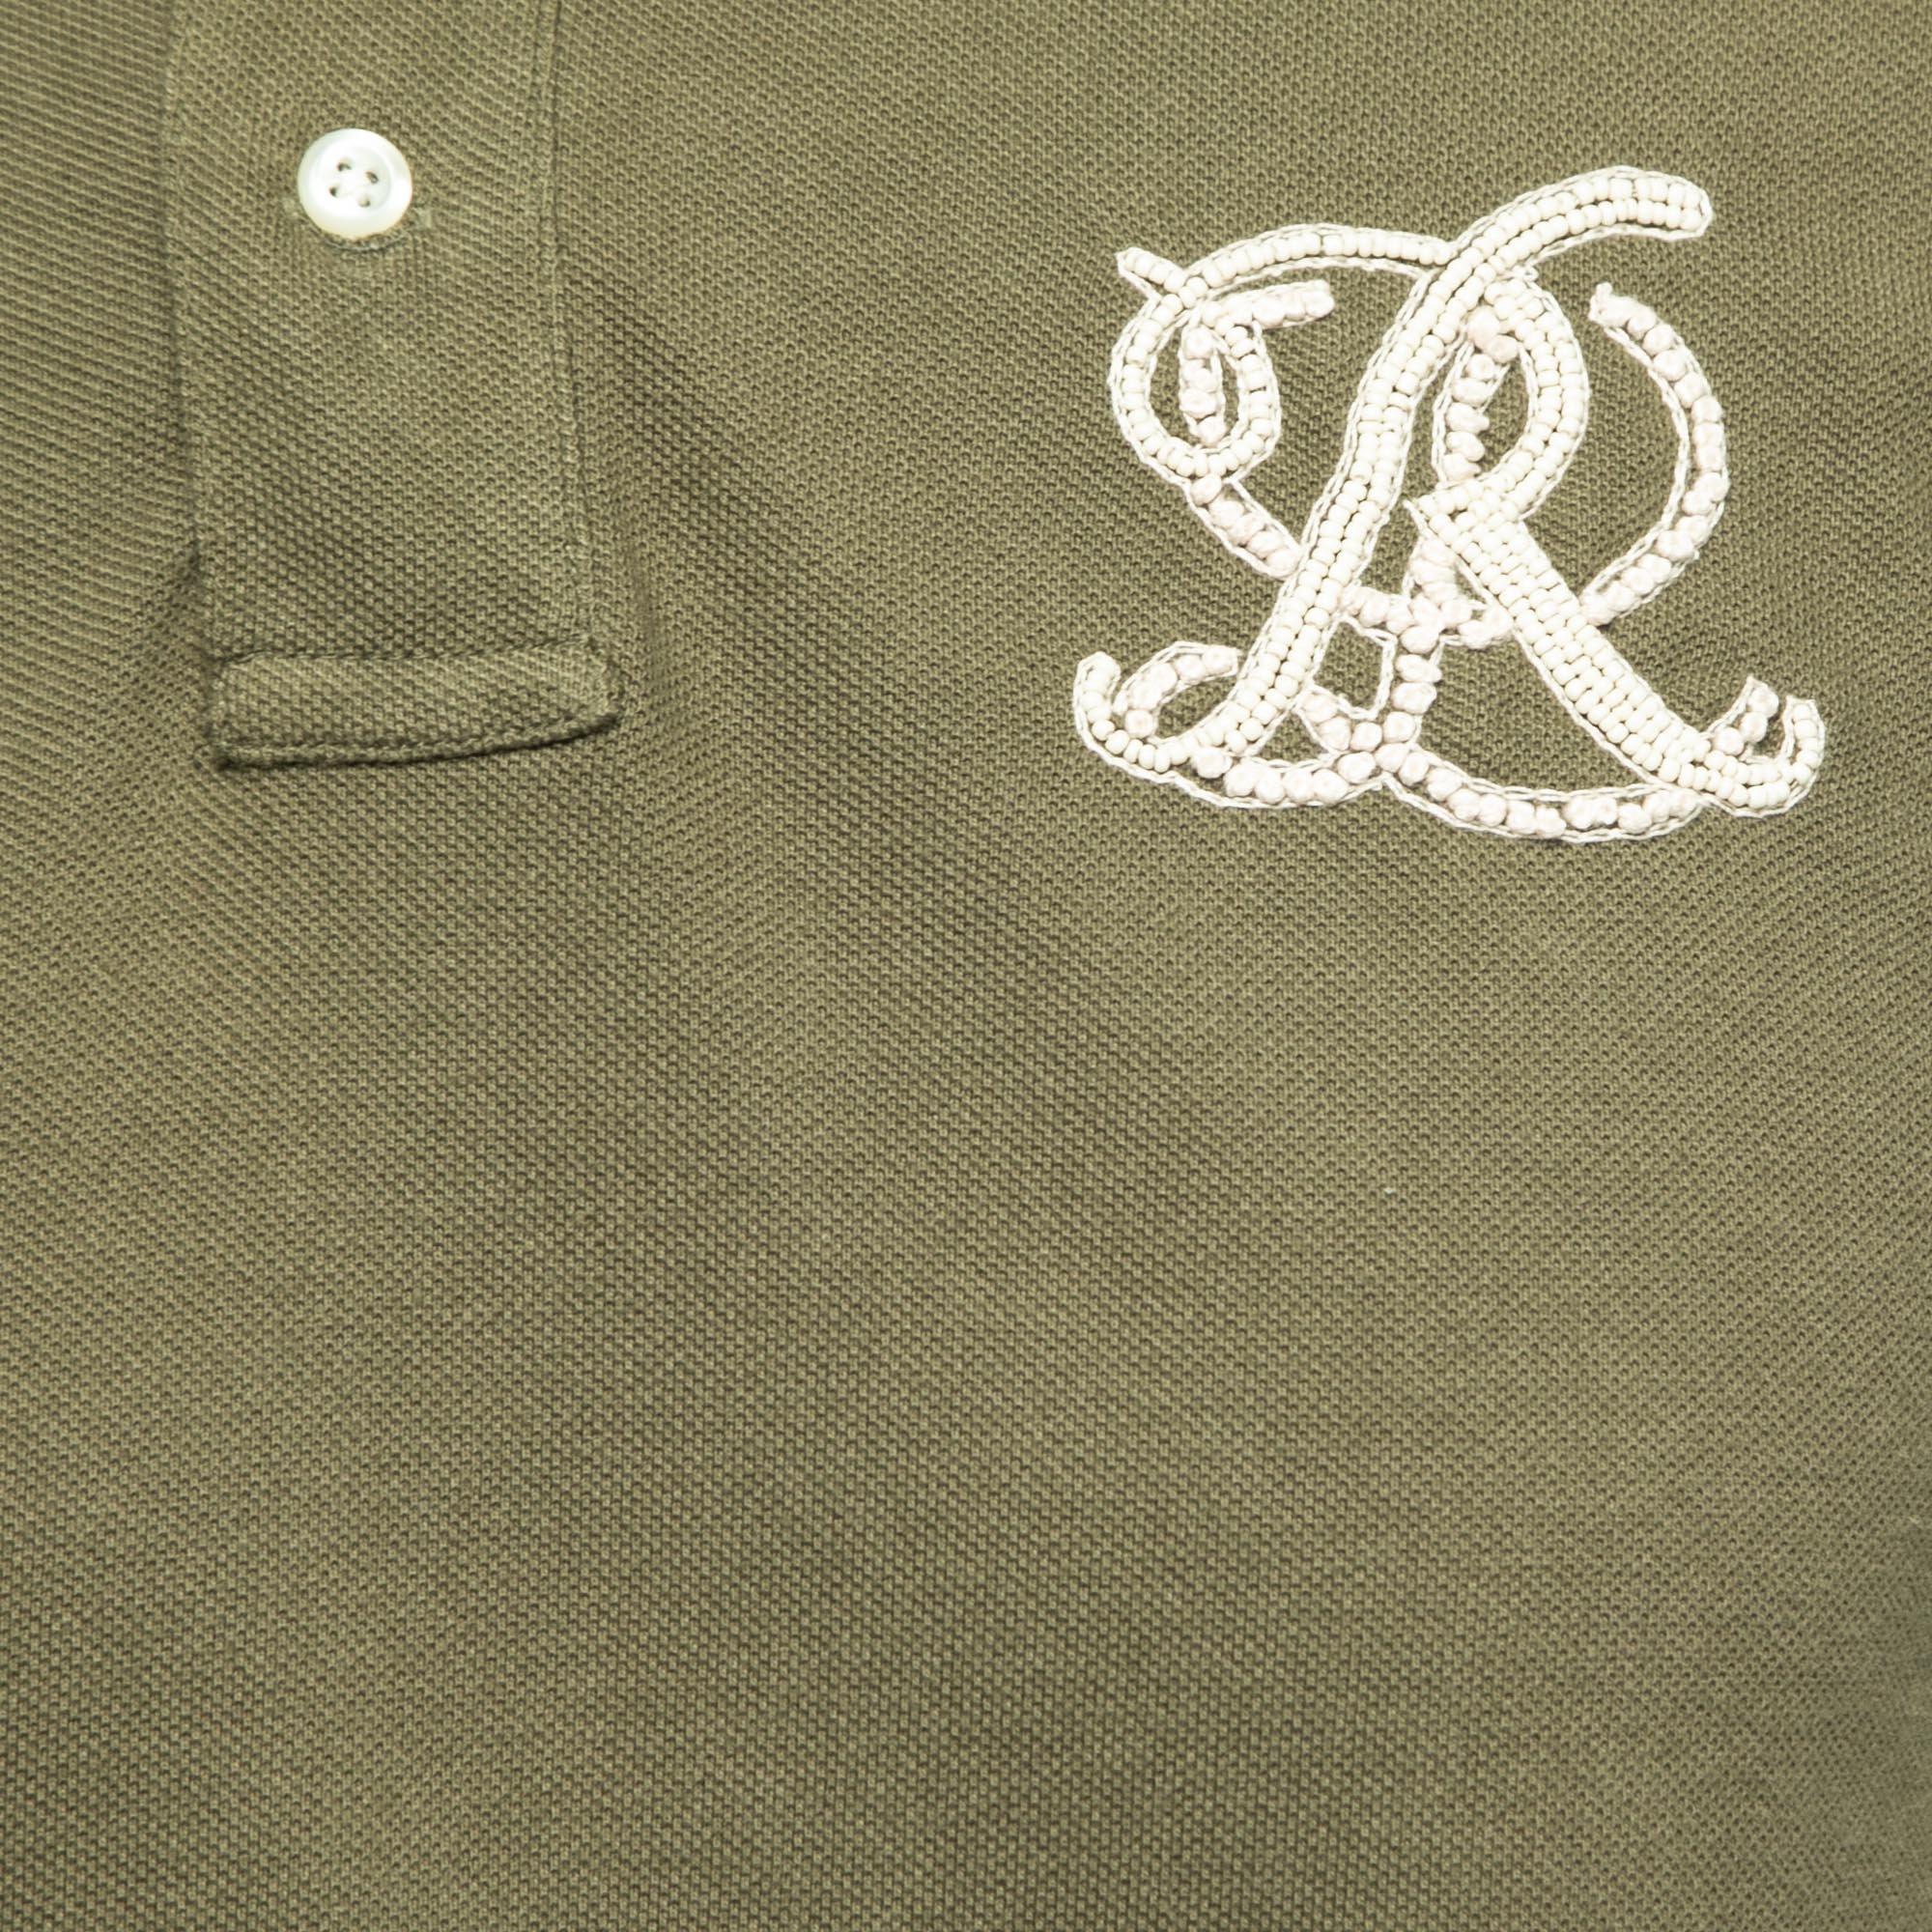 Polo Ralph Lauren Green Cotton Logo Embellished Polo T-Shirt M